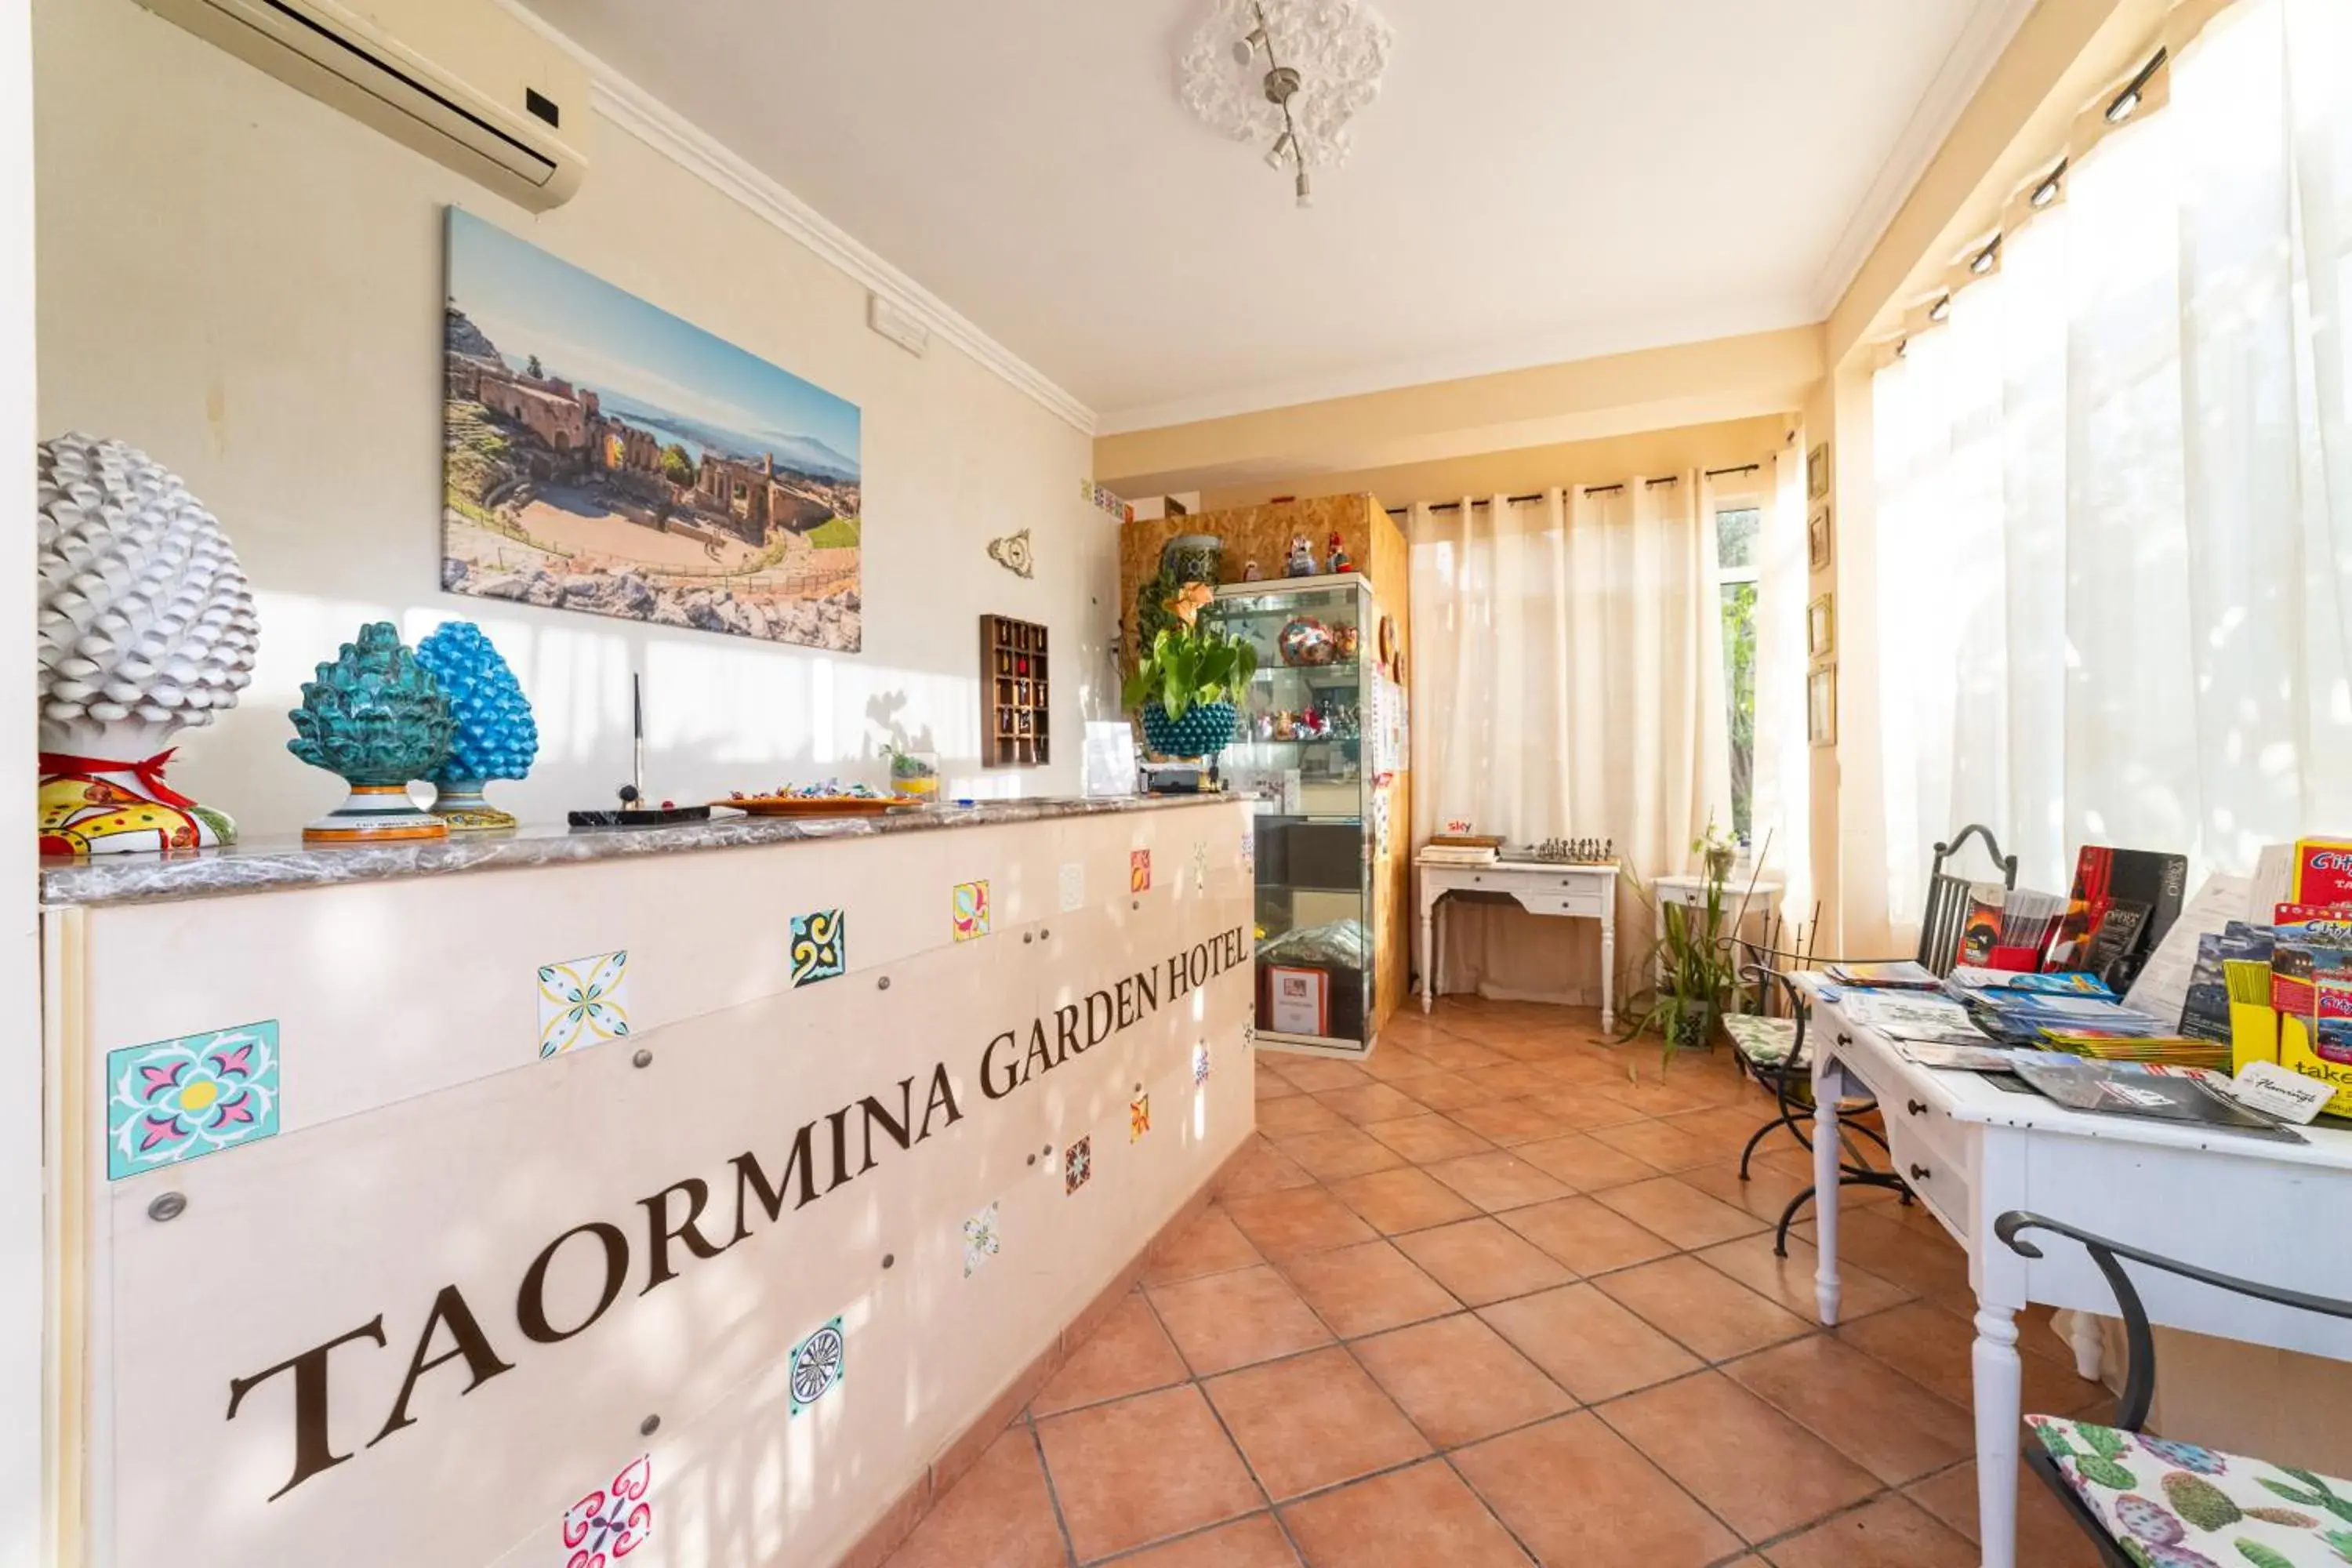 Lobby or reception in Taormina Garden Hotel